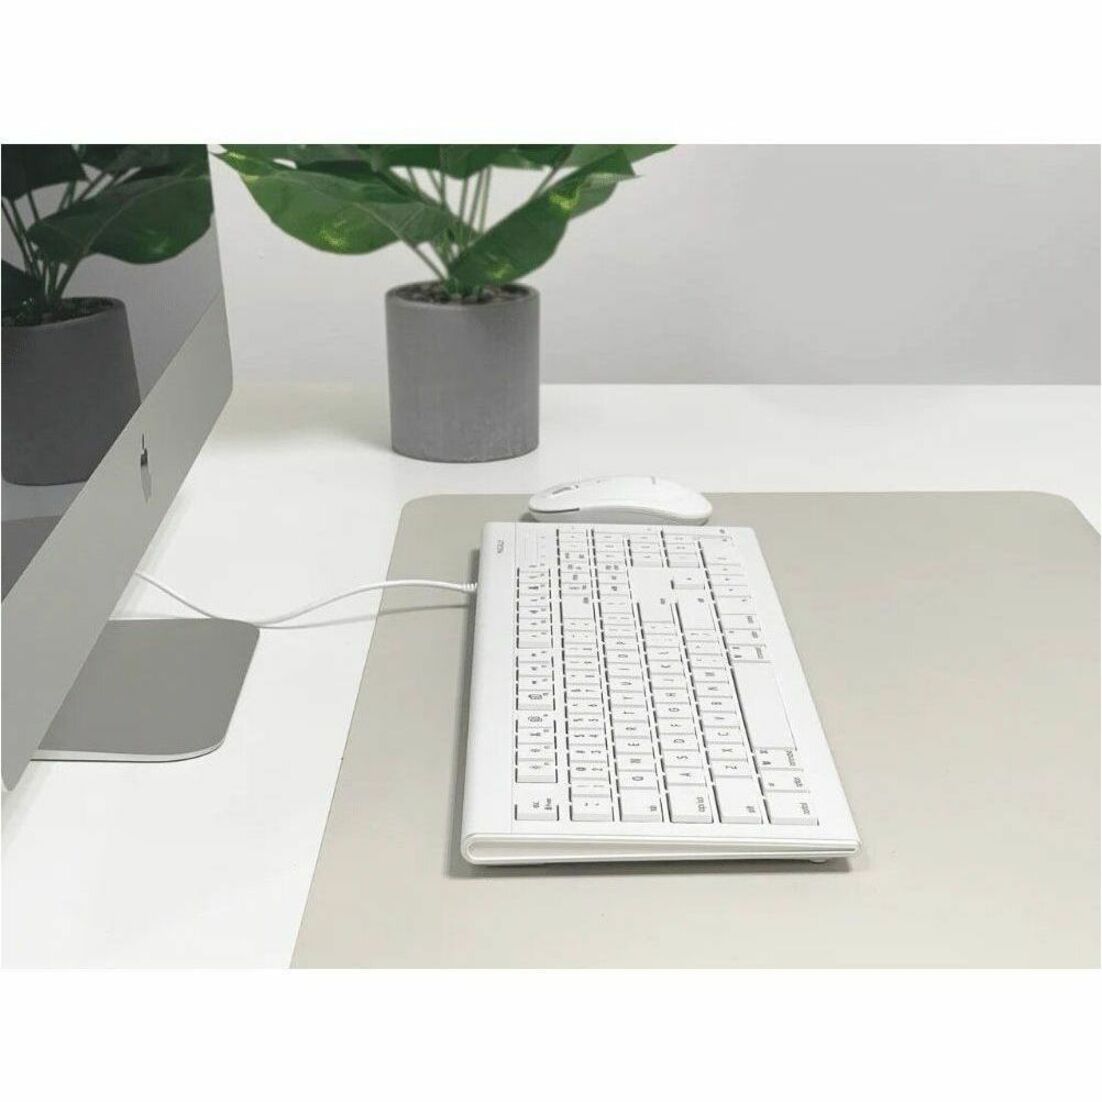 Macally UCMKEYE Keyboard, Full-size Keyboard with Multimedia Hot Keys